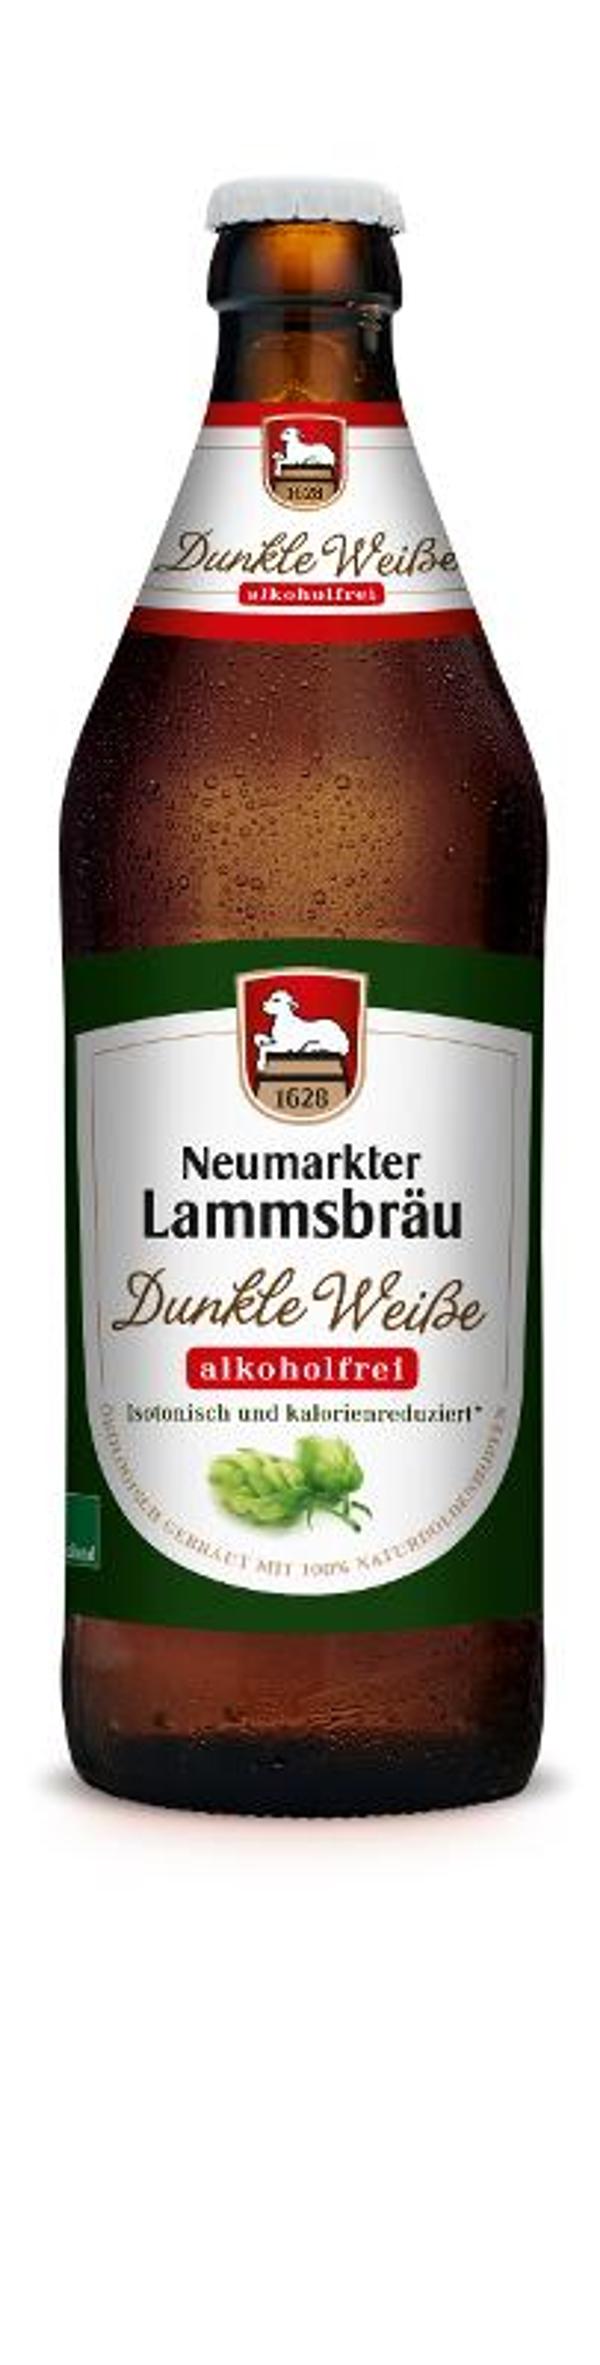 Produktfoto zu Lammsbräu Dunkle Weisse alkoholfrei